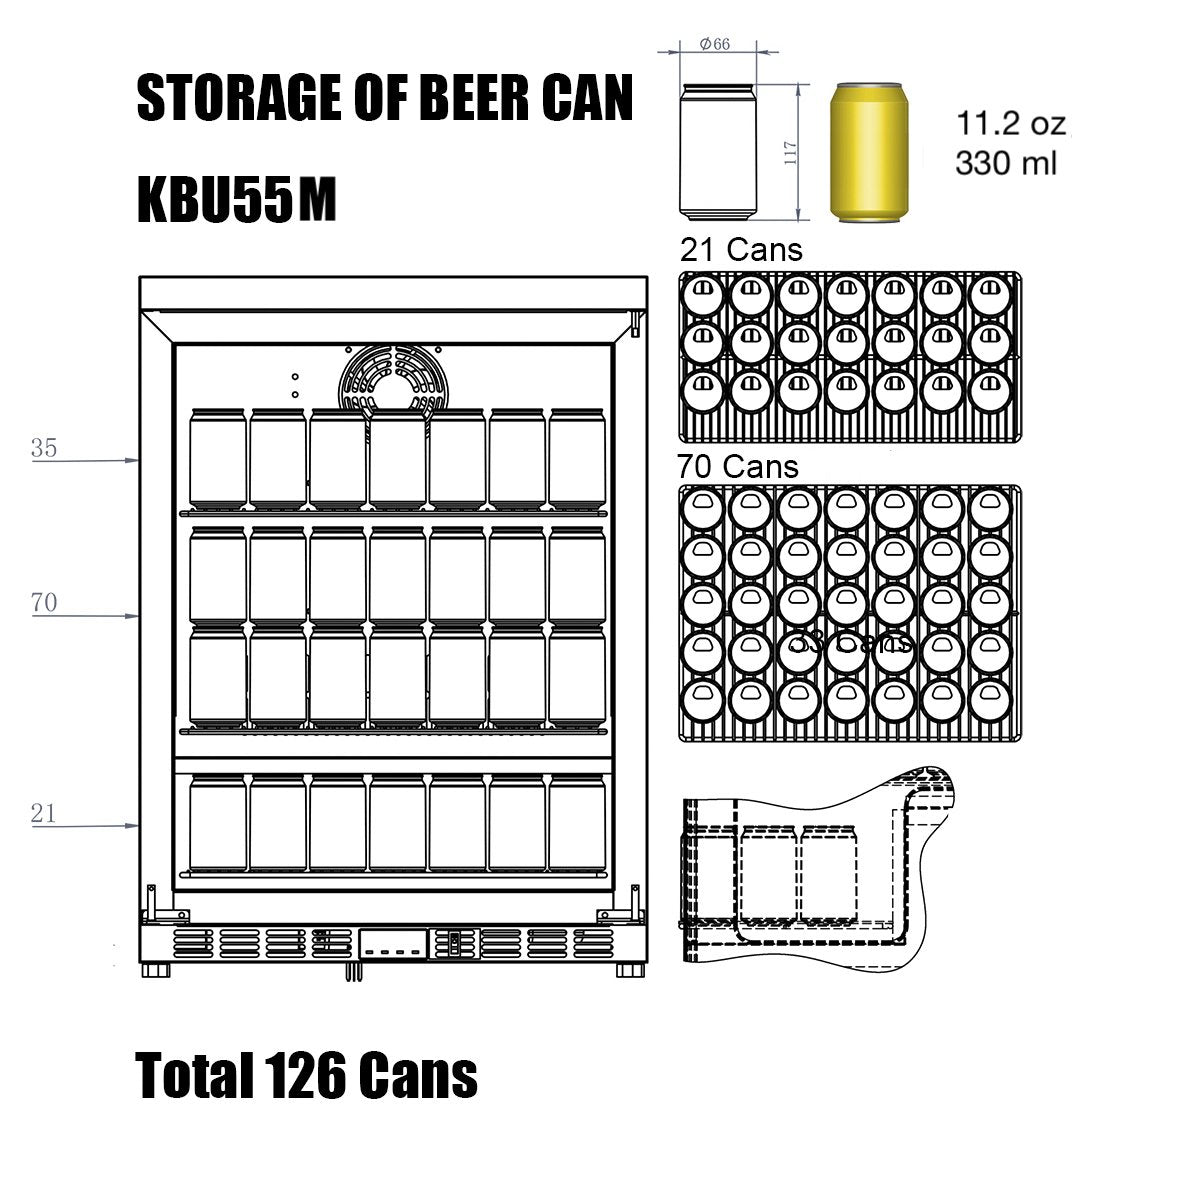 Kingsbottle 24 Inch Under Counter Beer Cooler Drinks Stainless Steel KBU55M, RHH-Wine Coolers-The Wine Cooler Club